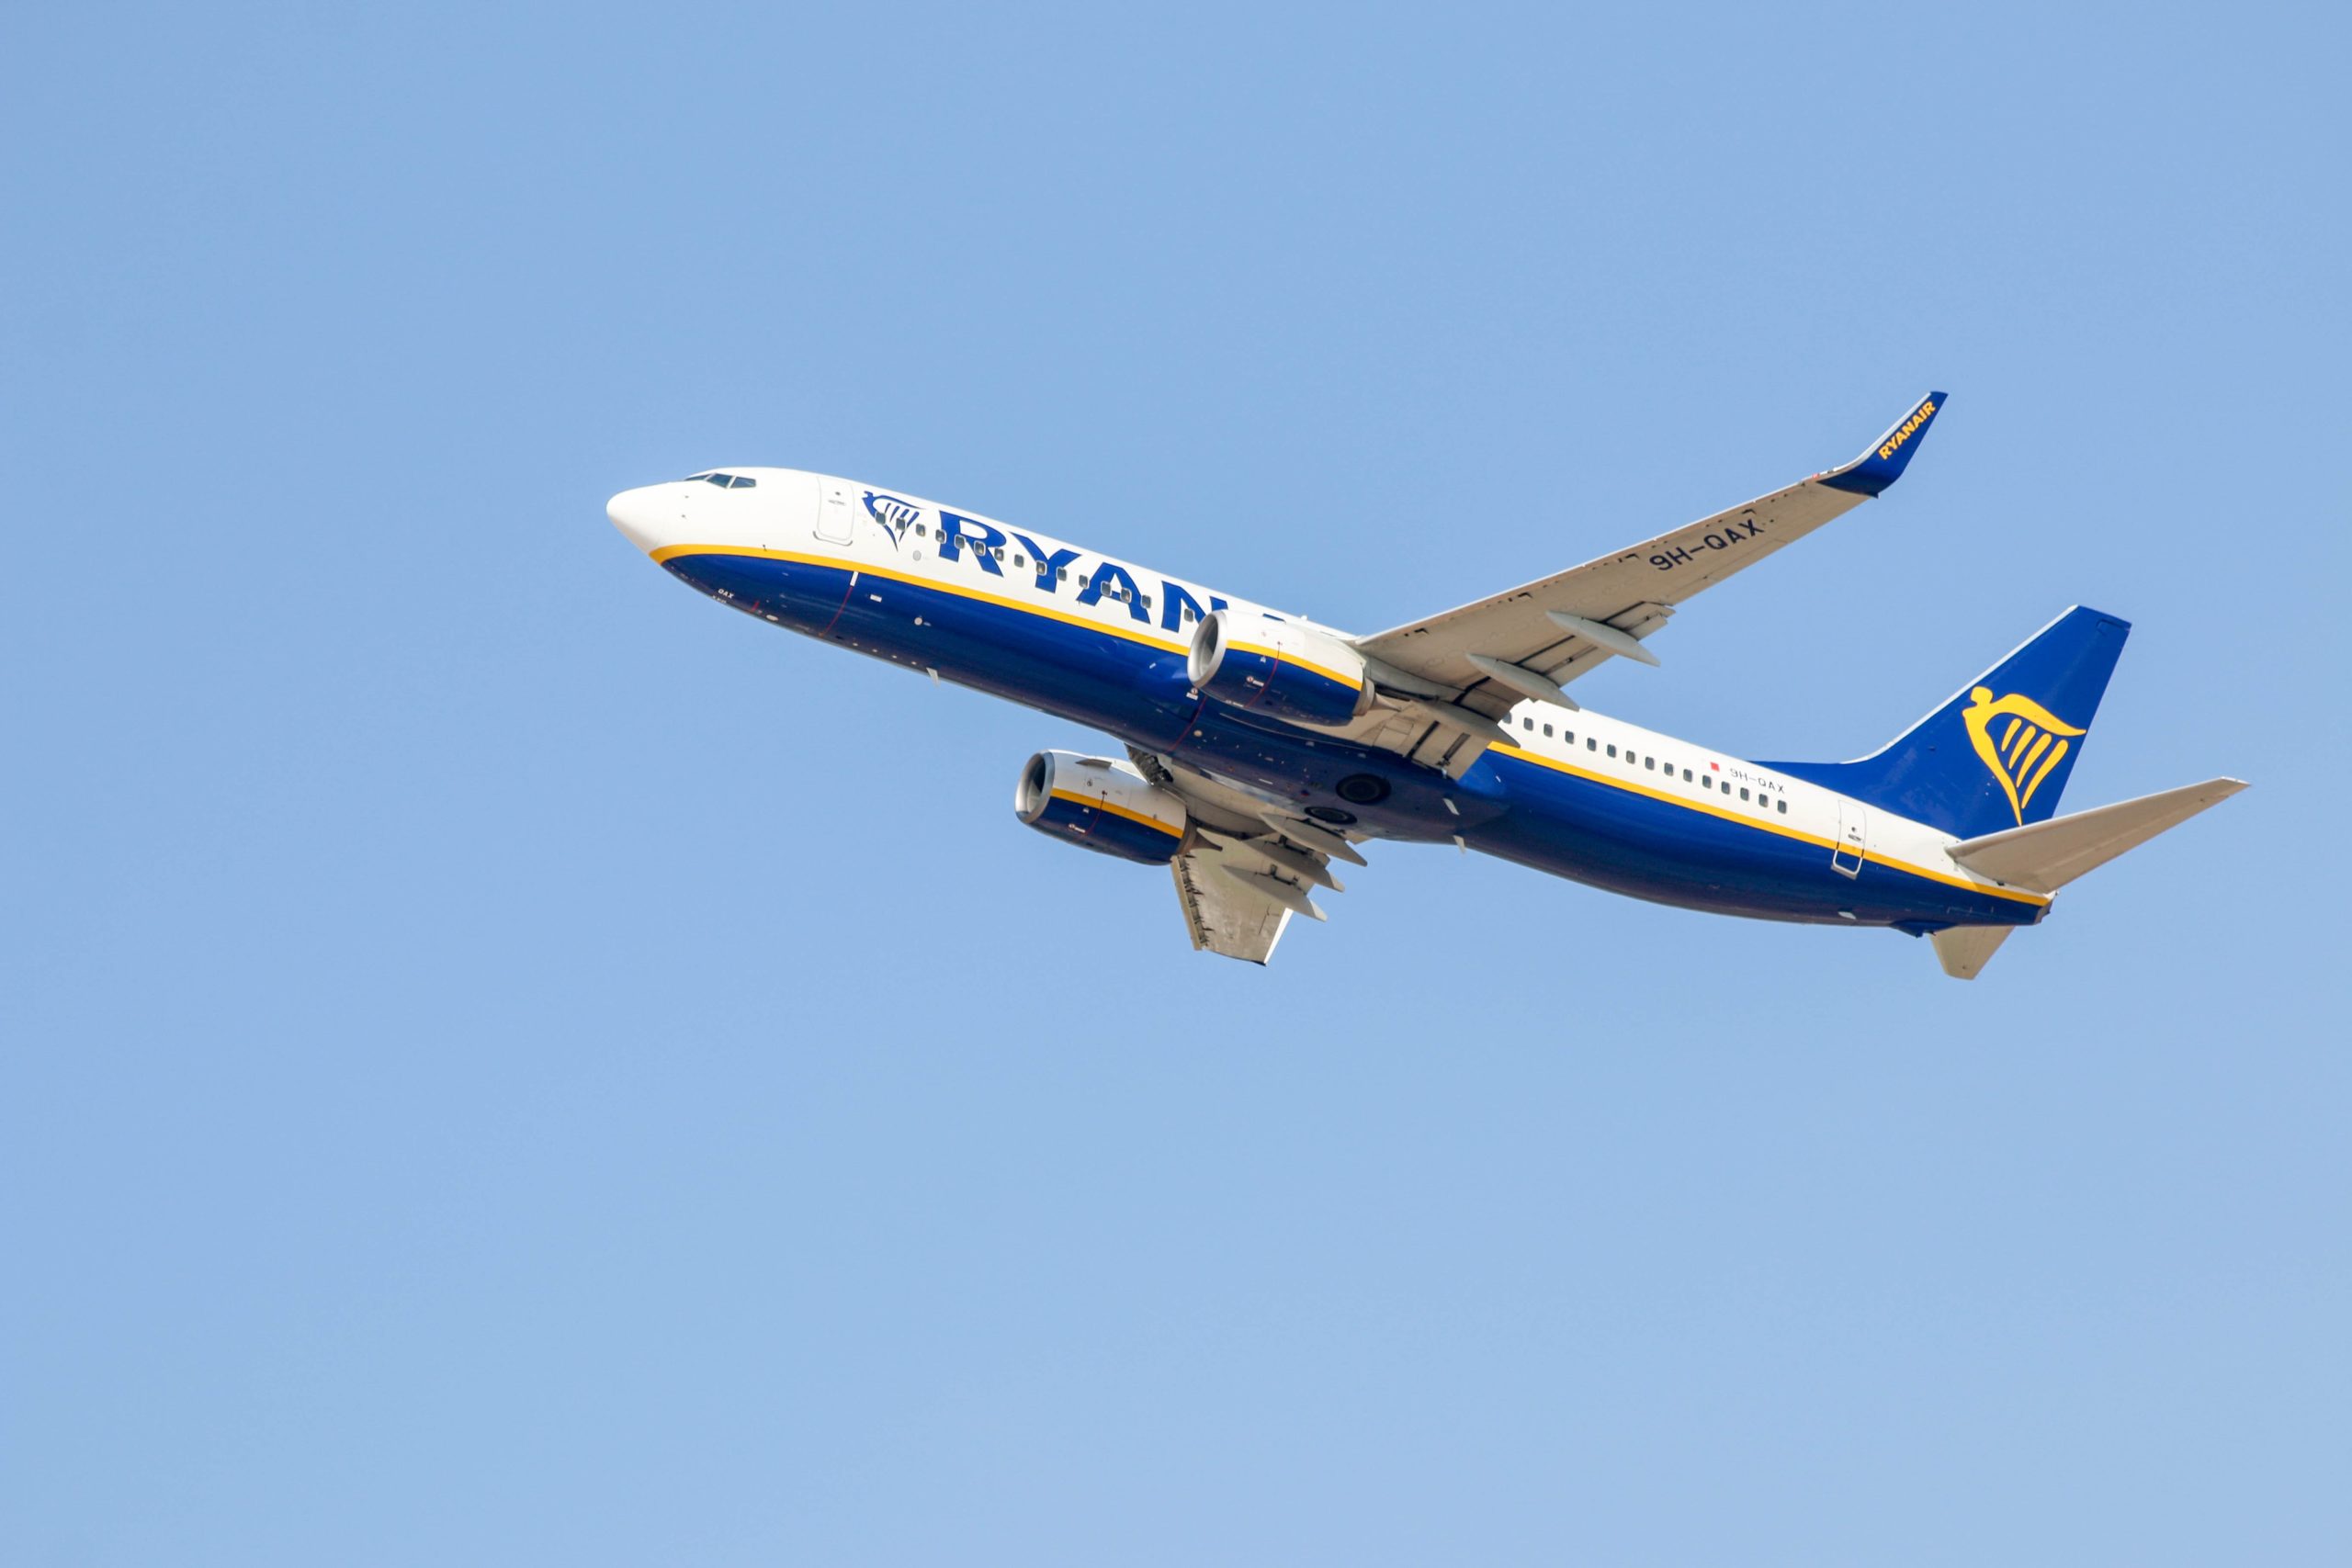 Ryanair plane taking off in blue sky